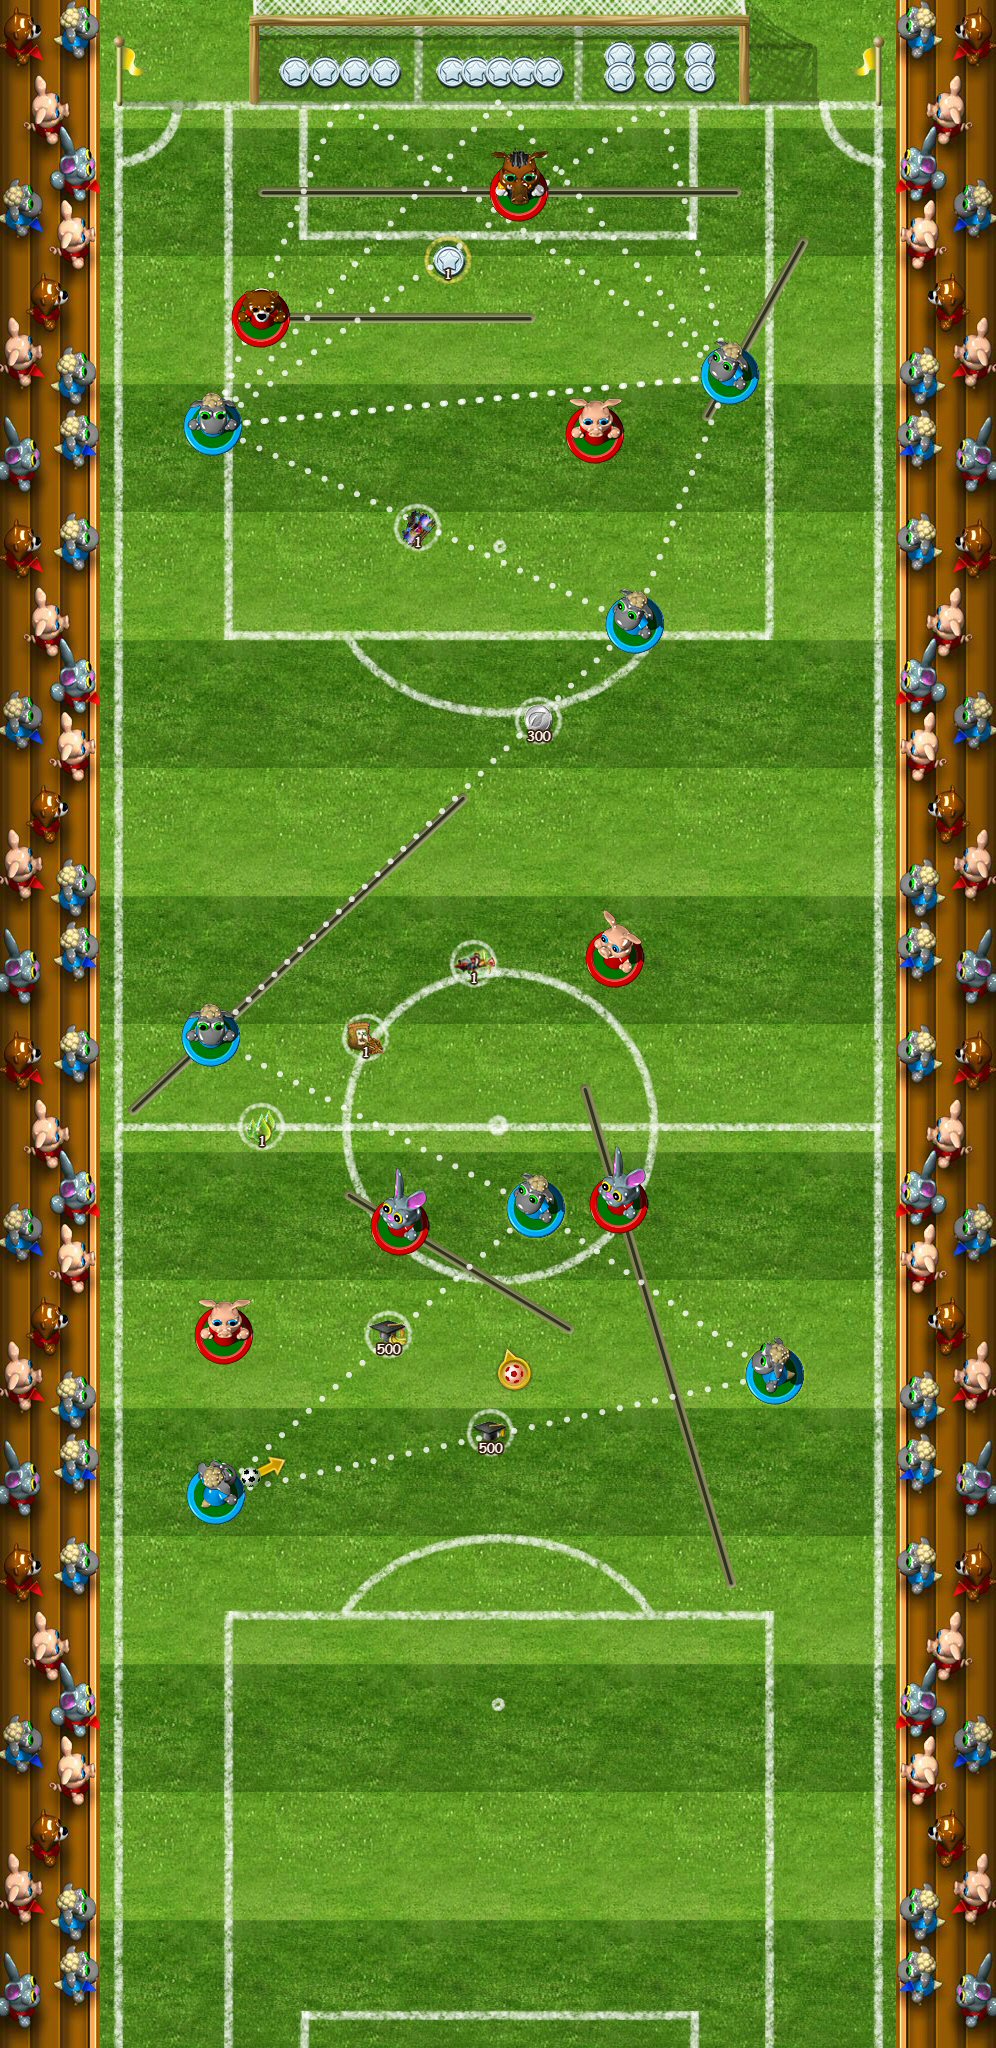 soccerjul2019_layout1.jpg